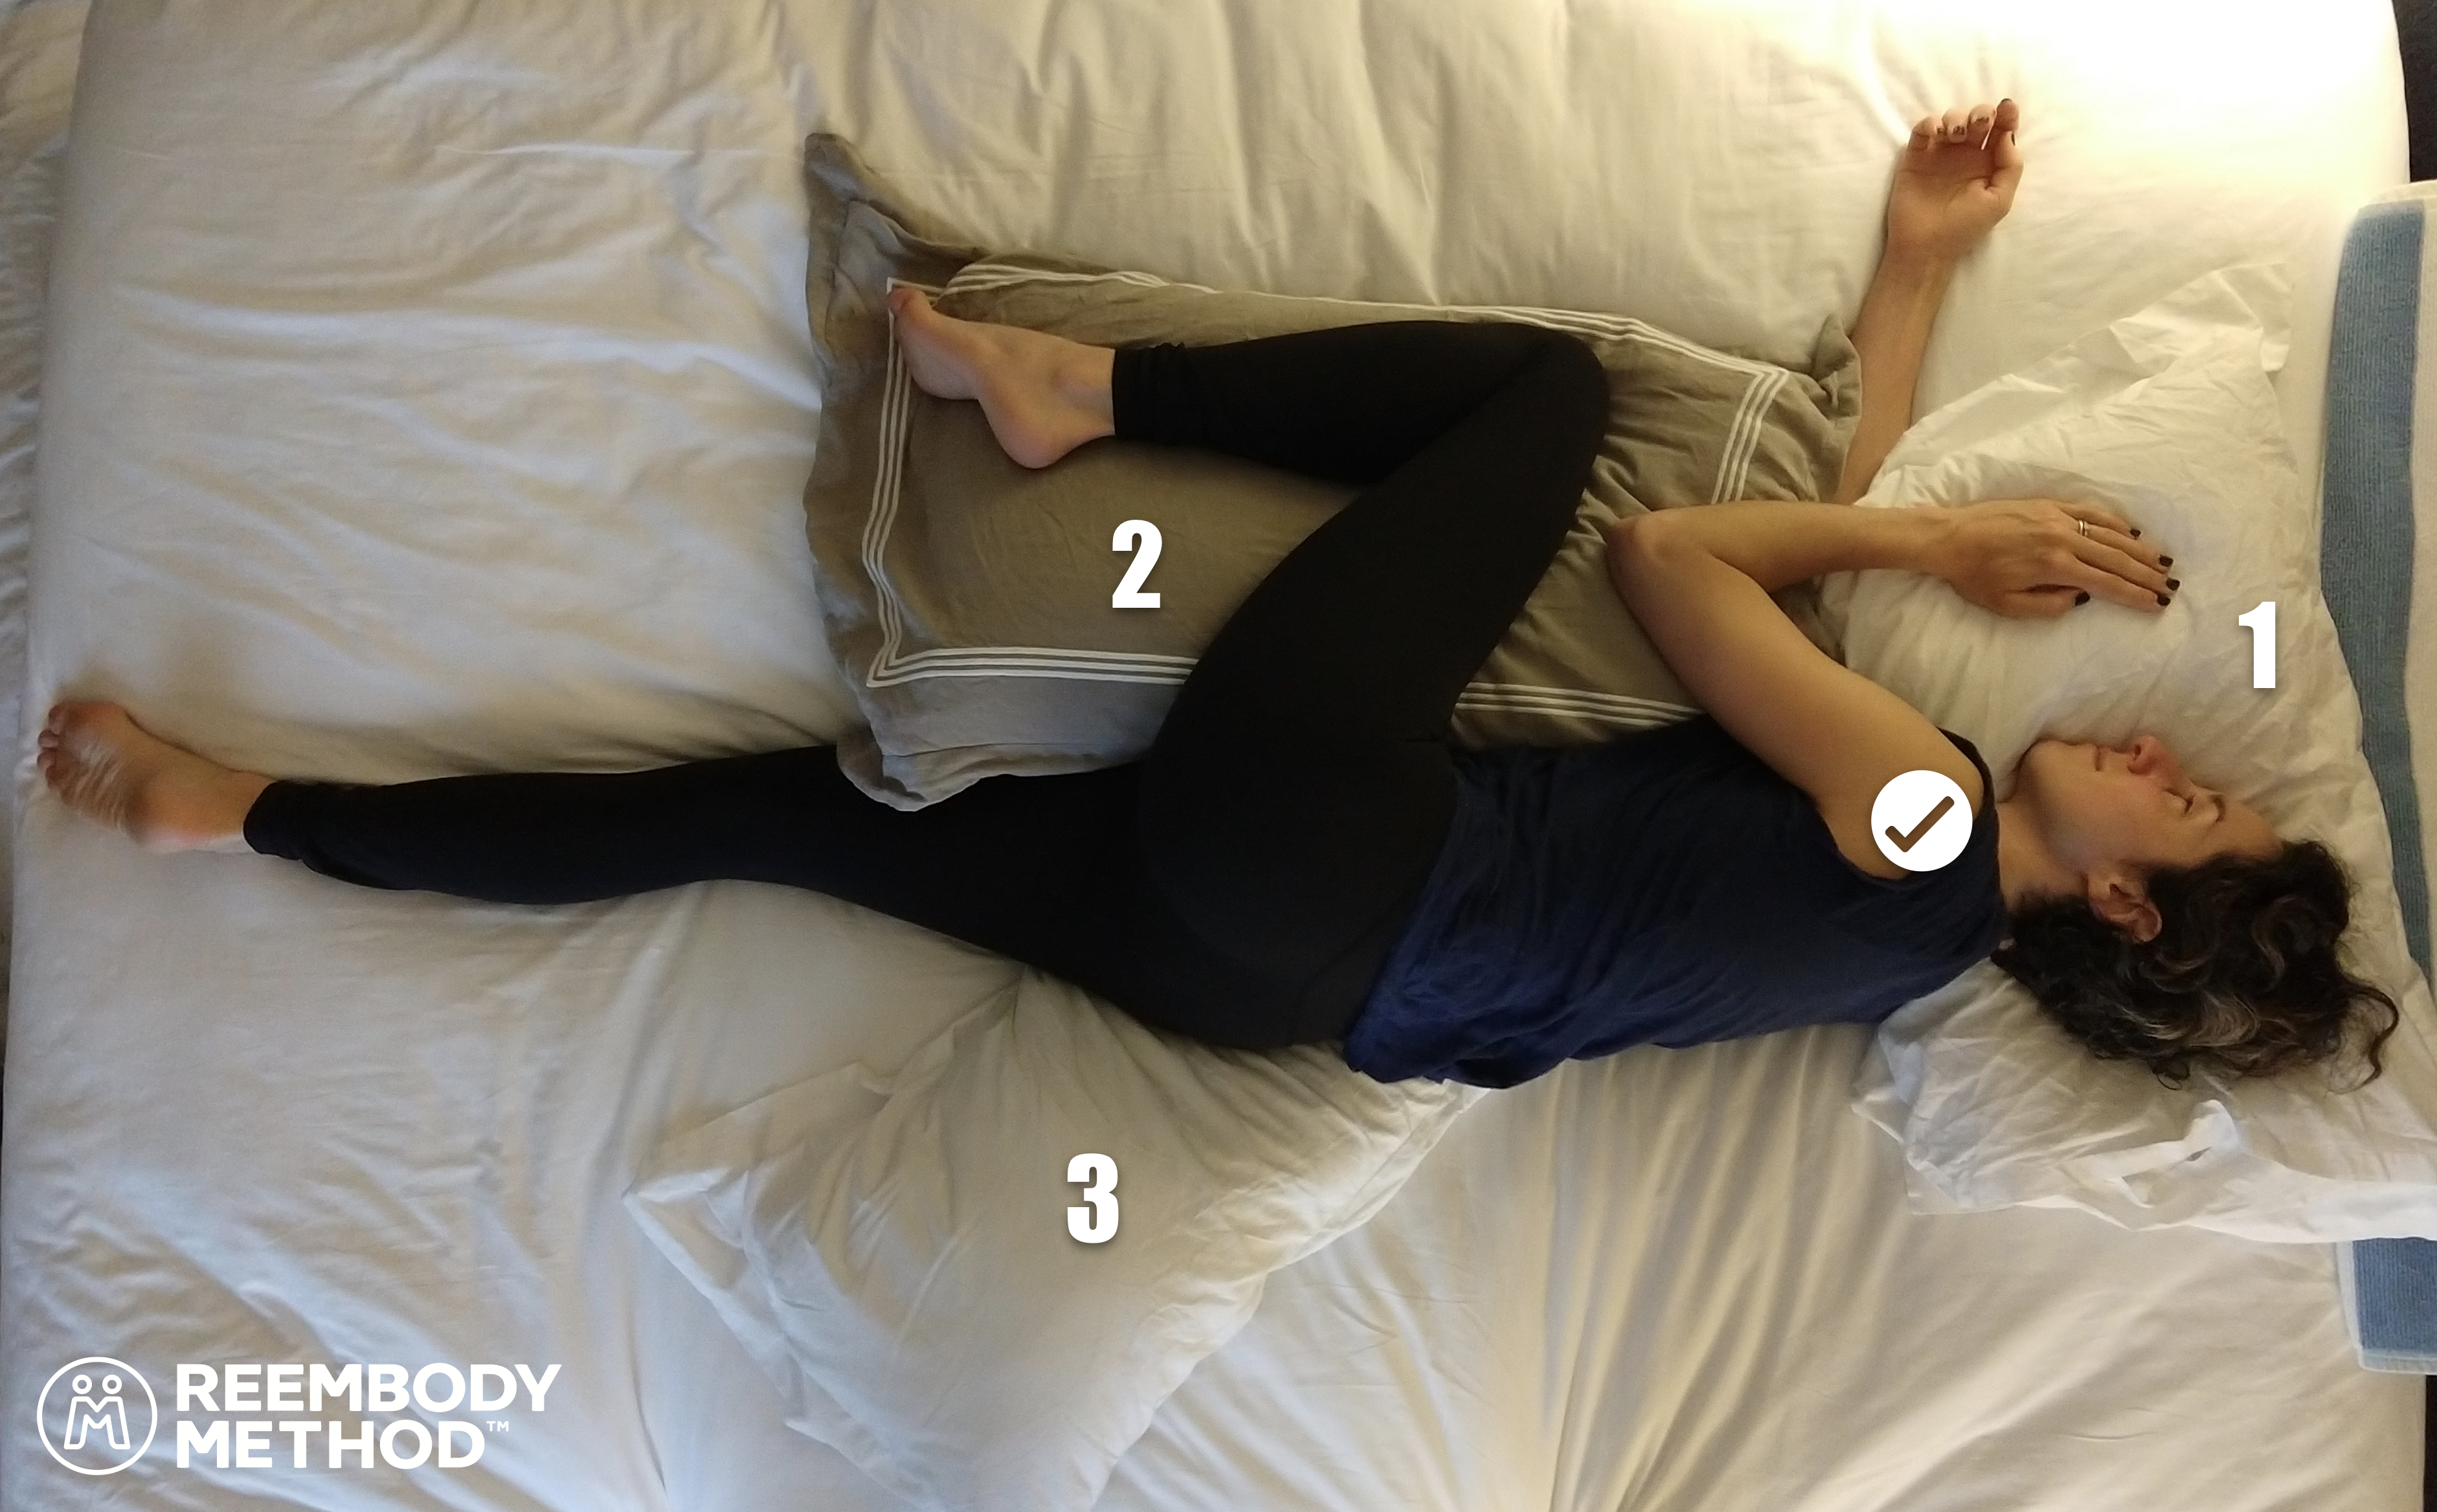 Pillow Between Knees? Change the Way You Sleep!